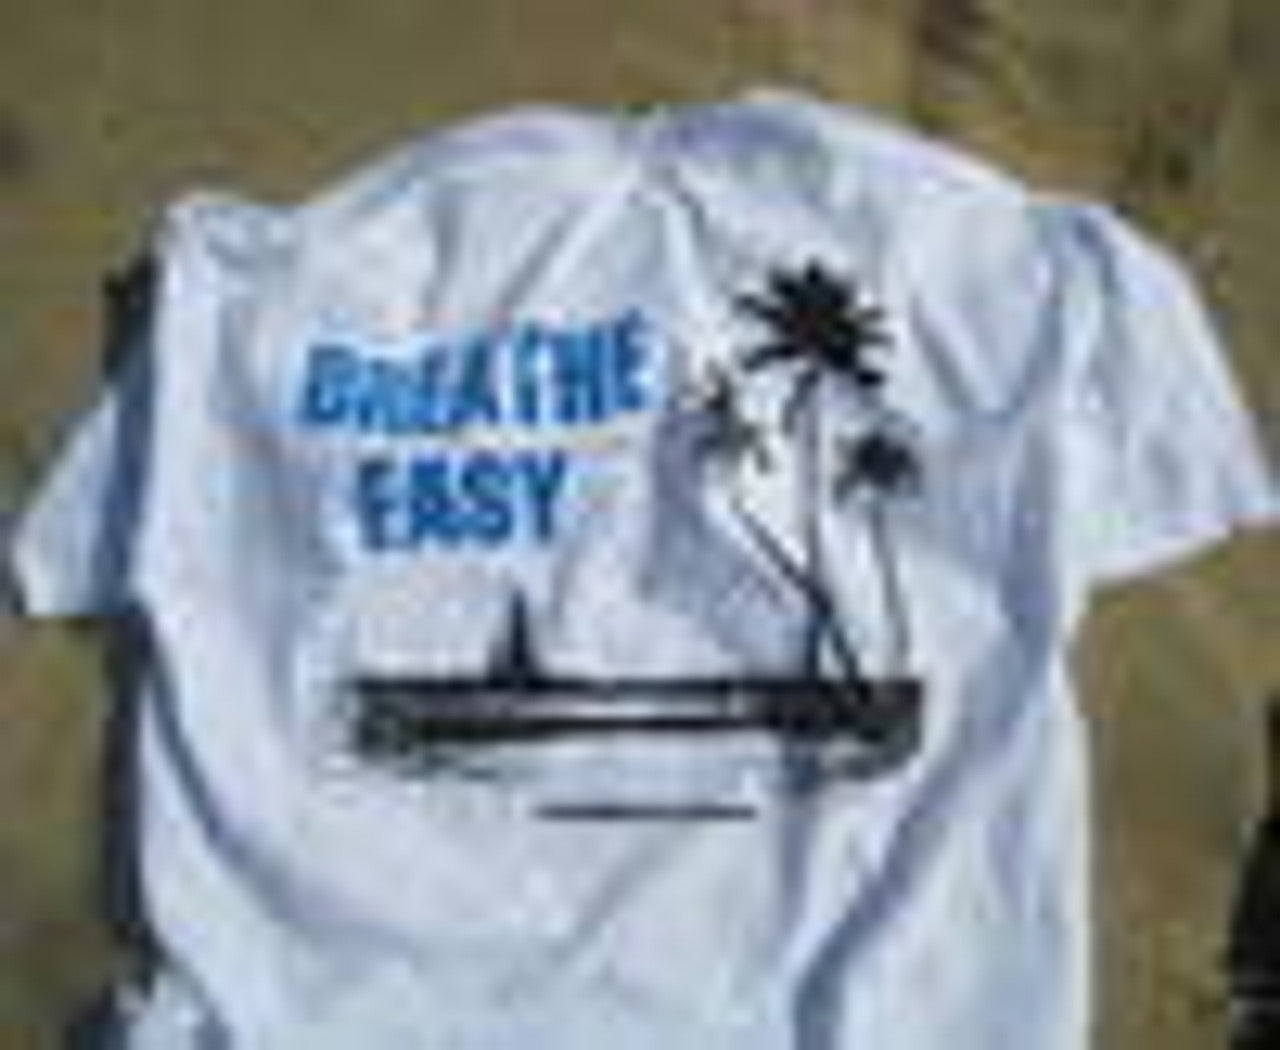 Breathe Easy T-shirt